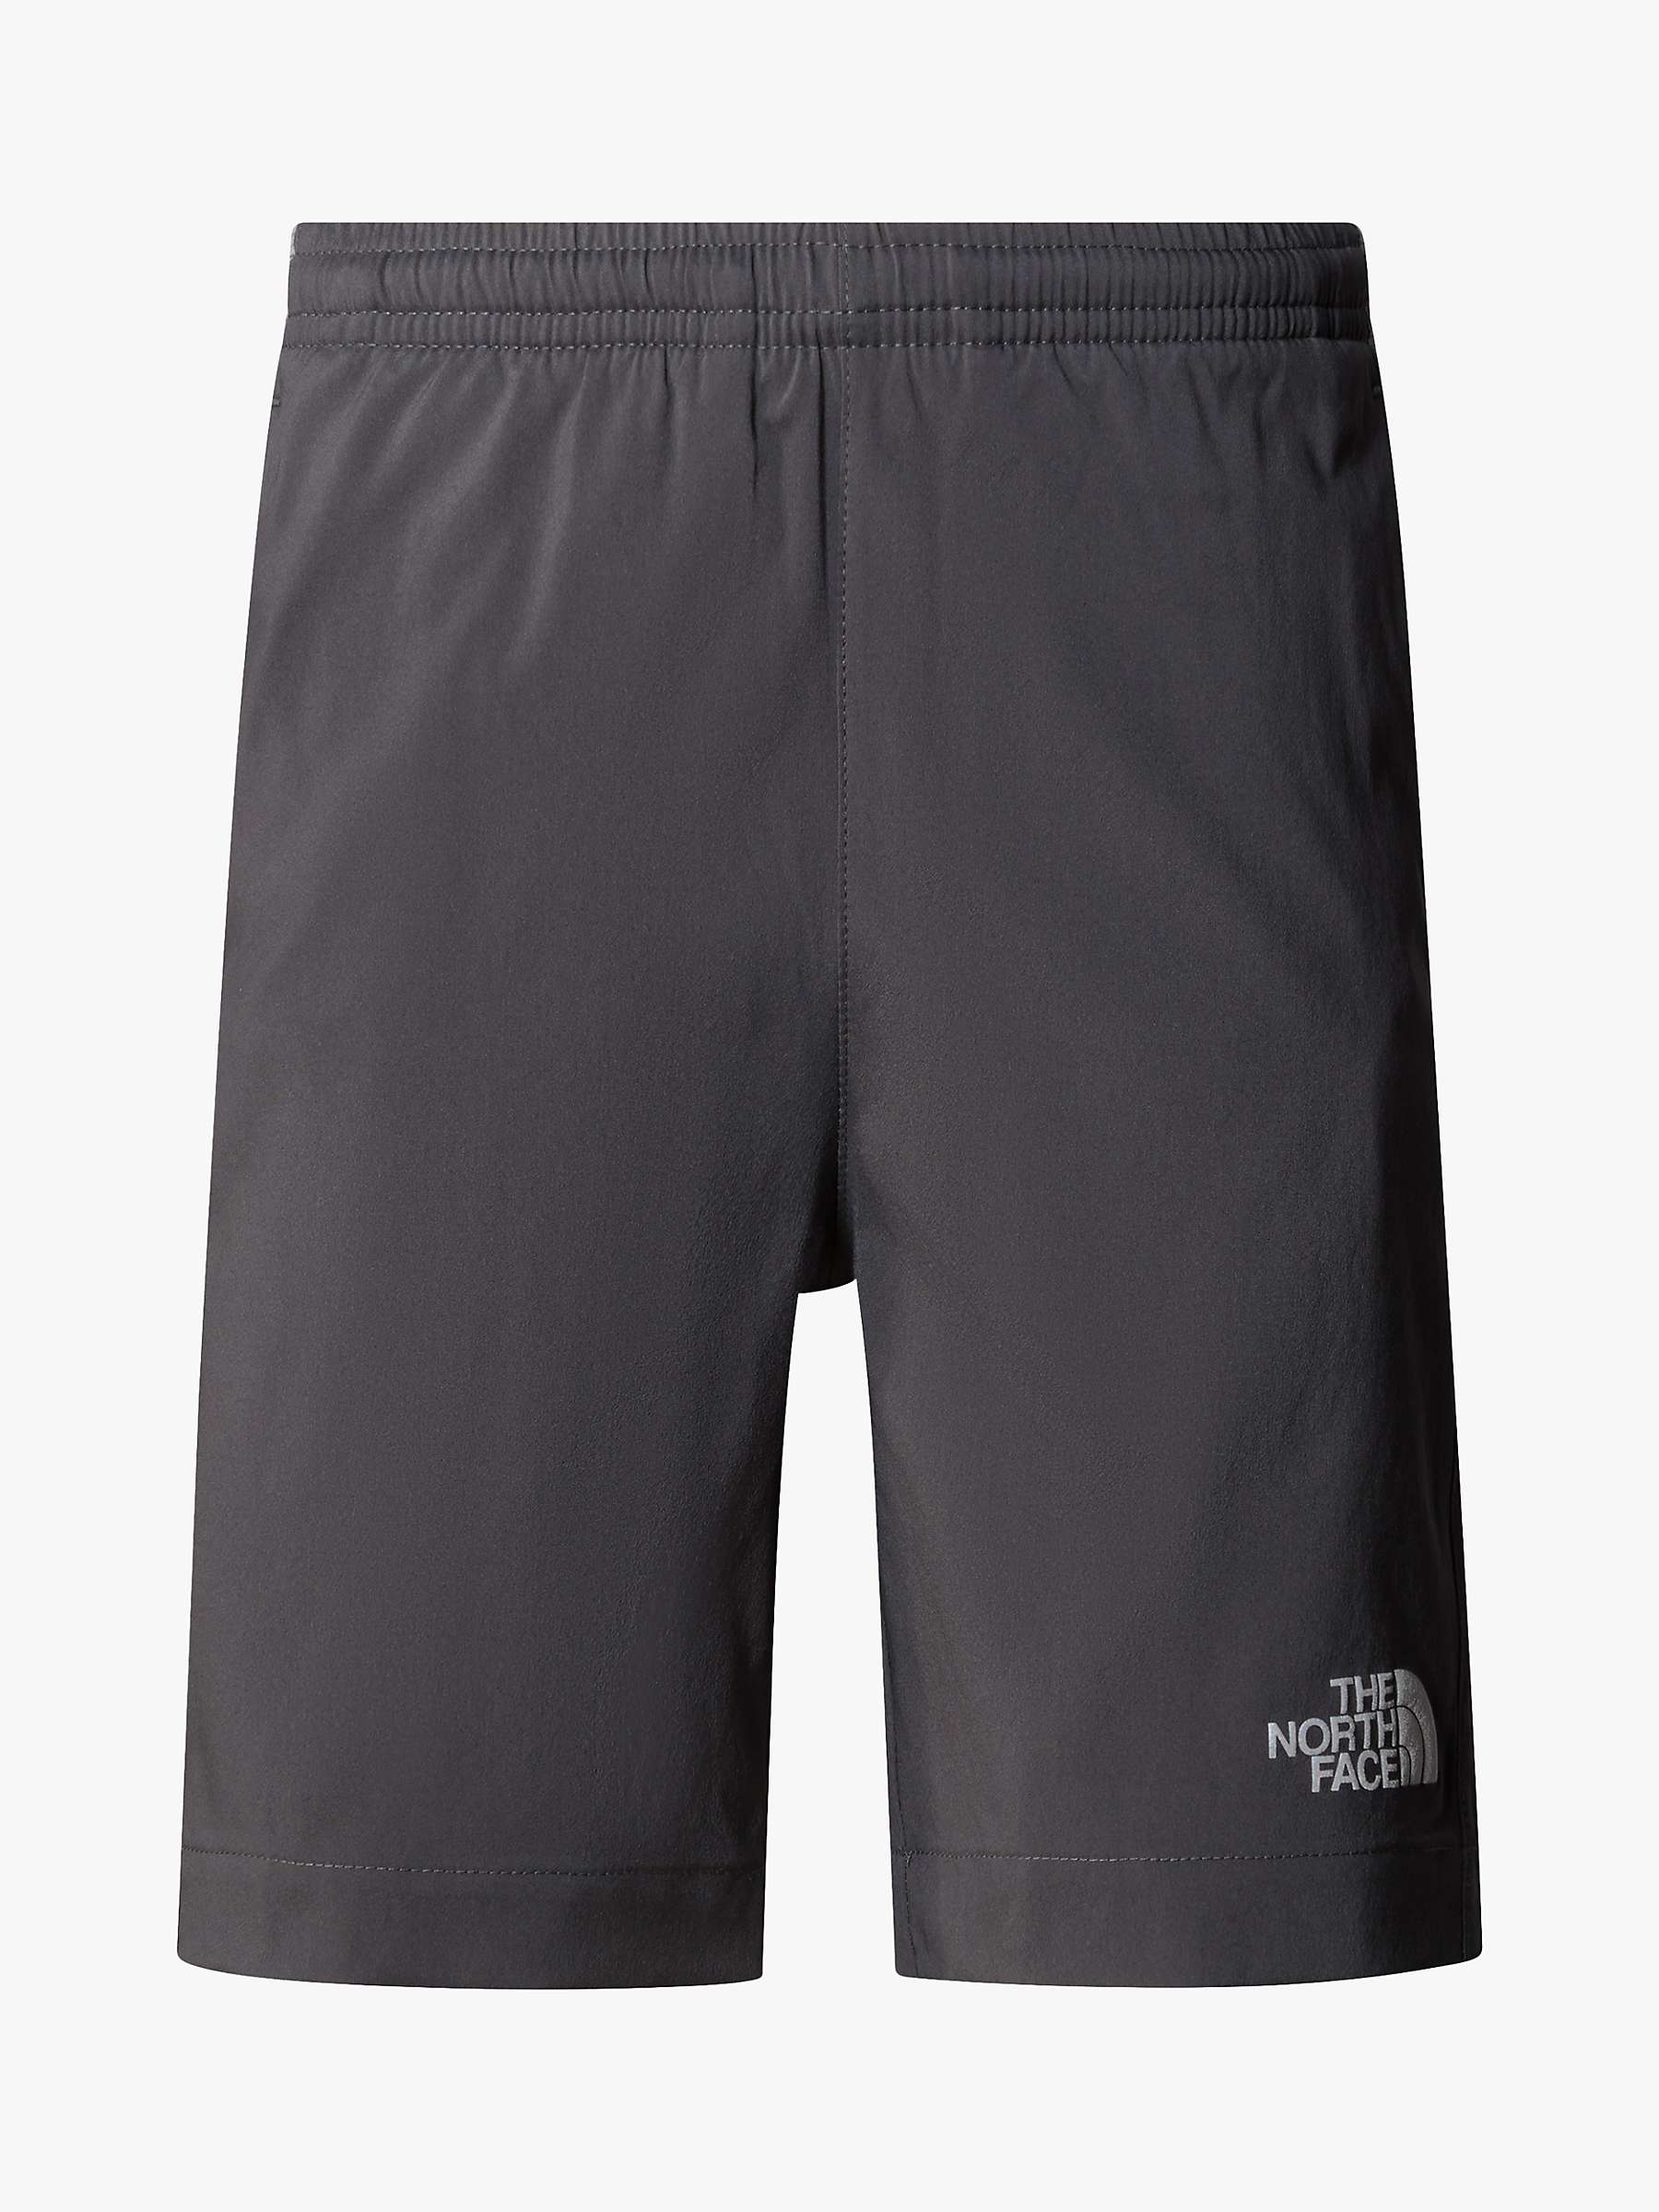 Buy The North Face Kids' Reactor Drawstring Shorts, Asphalt Grey Online at johnlewis.com